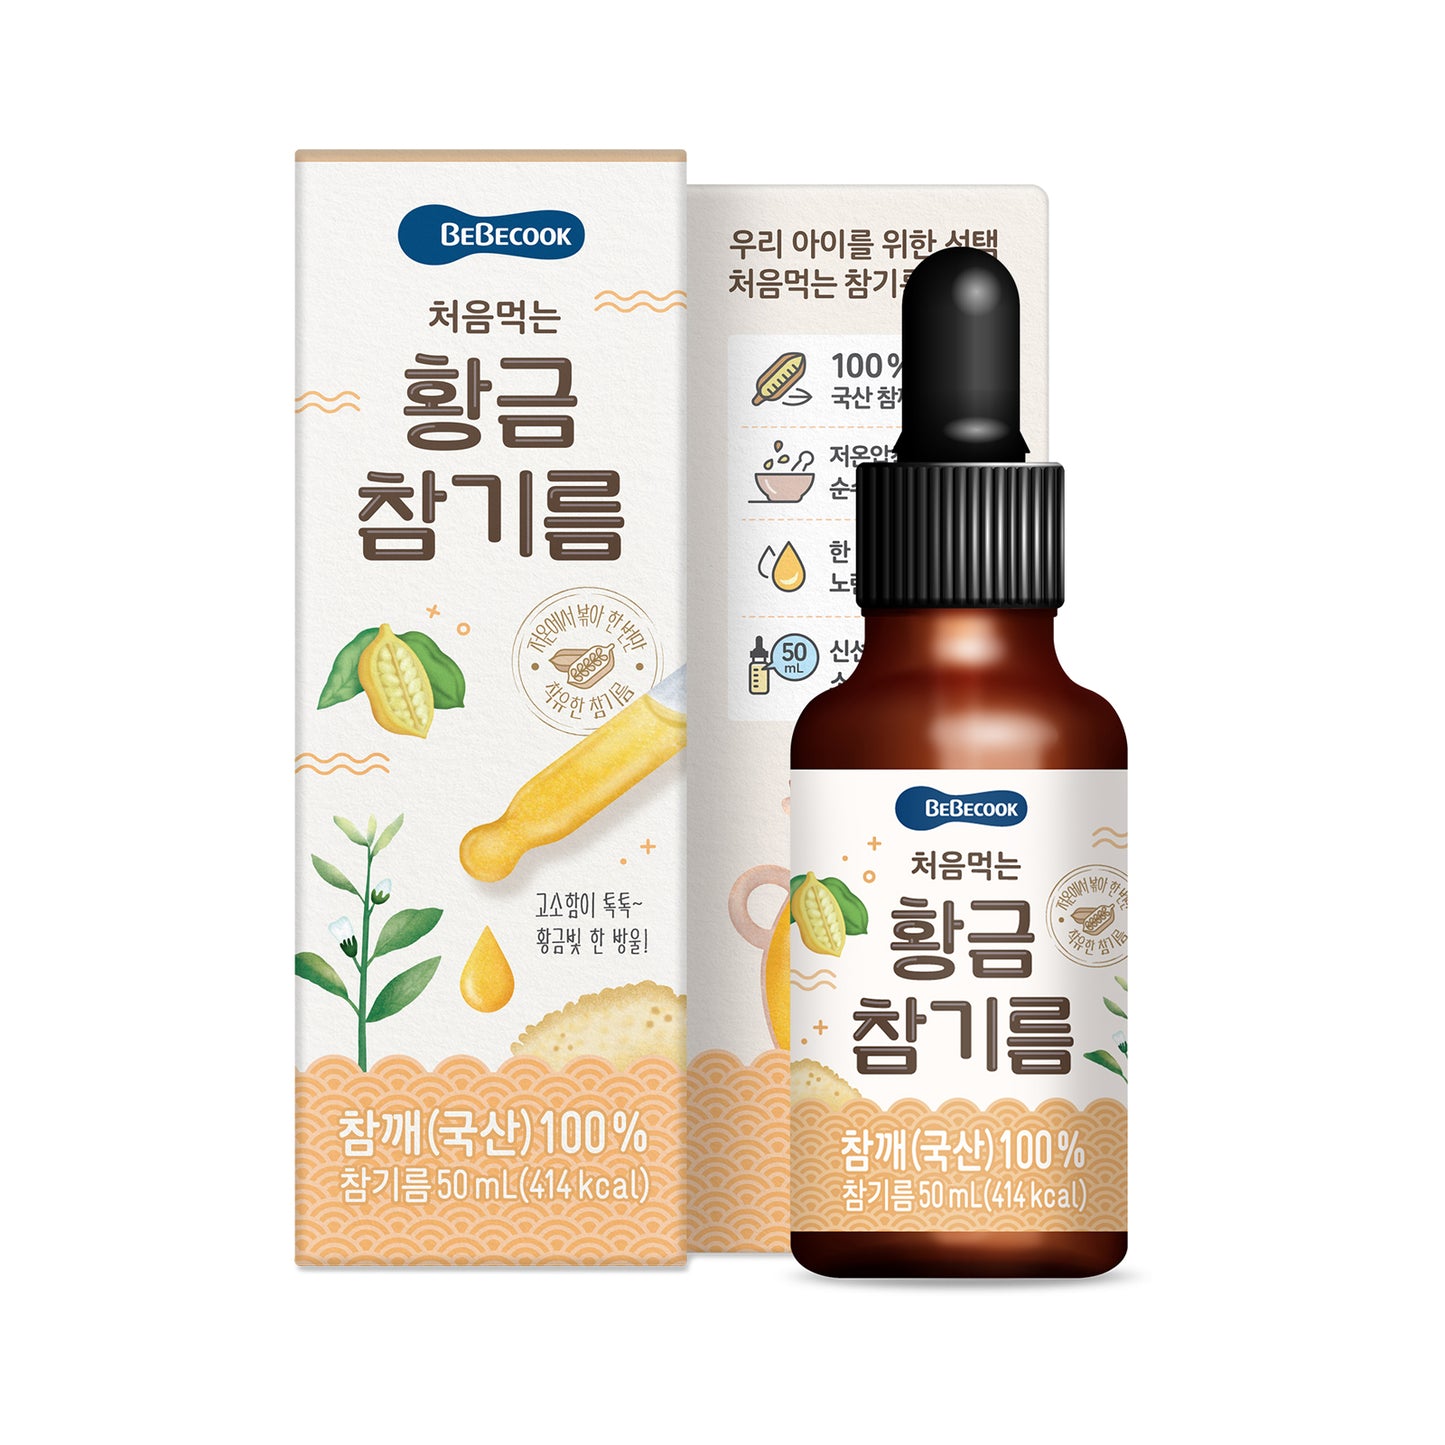 BeBecook - My First Golden Sesame Oil 50ml